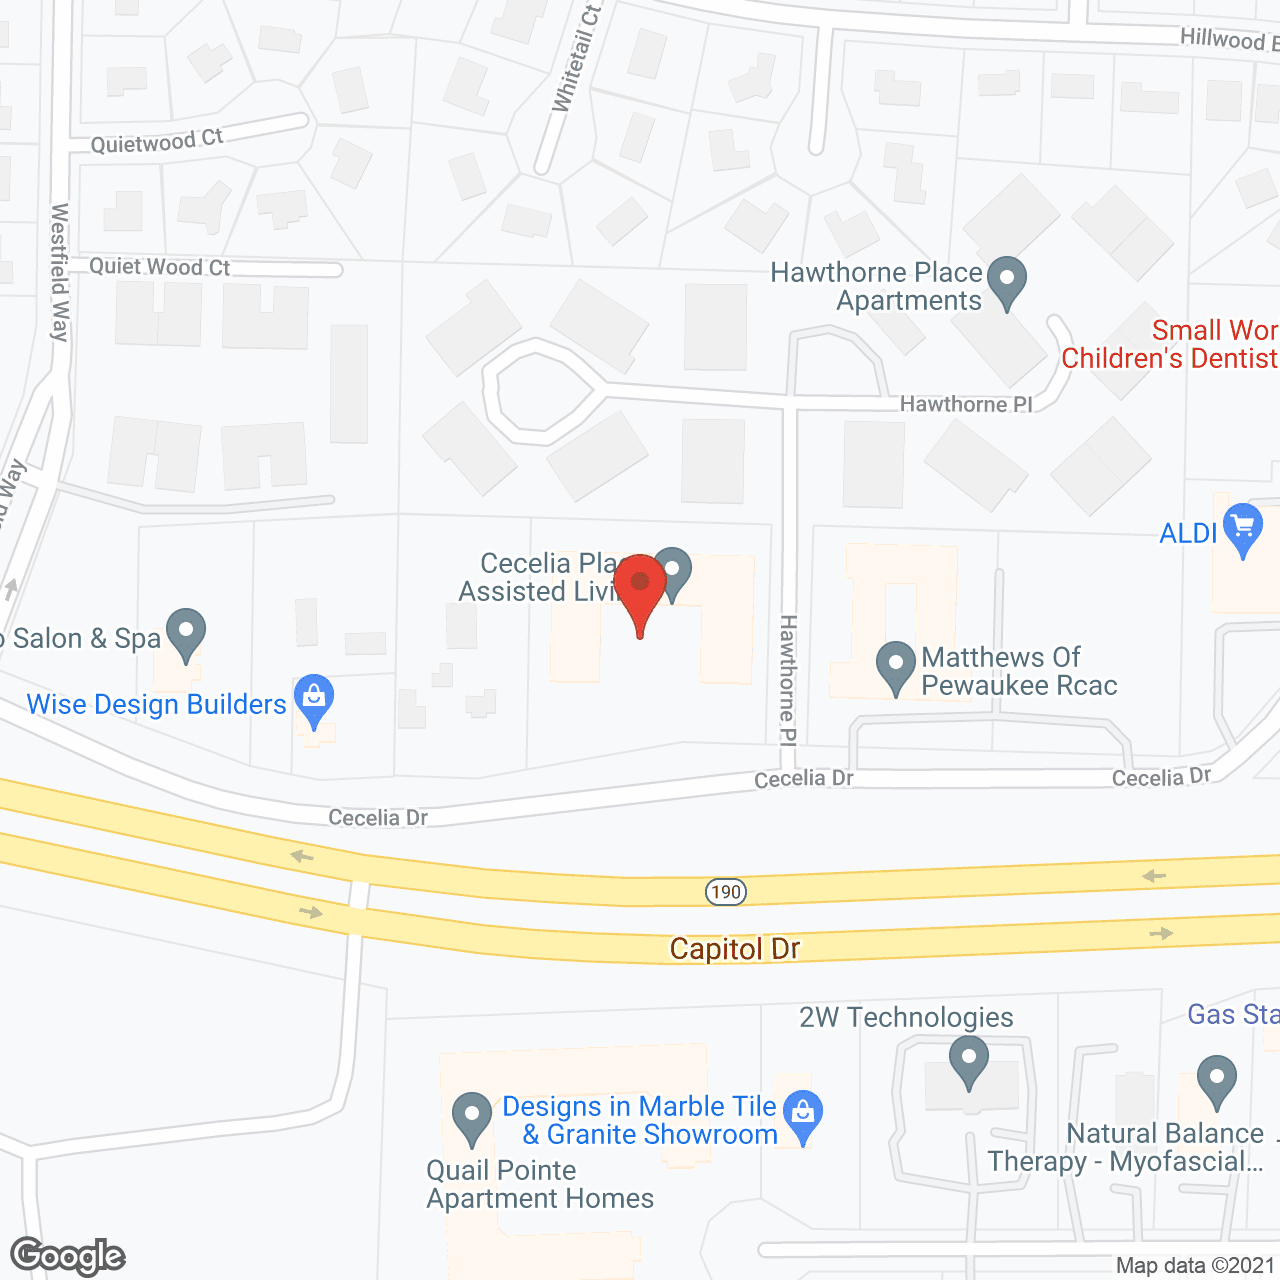 Cecelia Place in google map